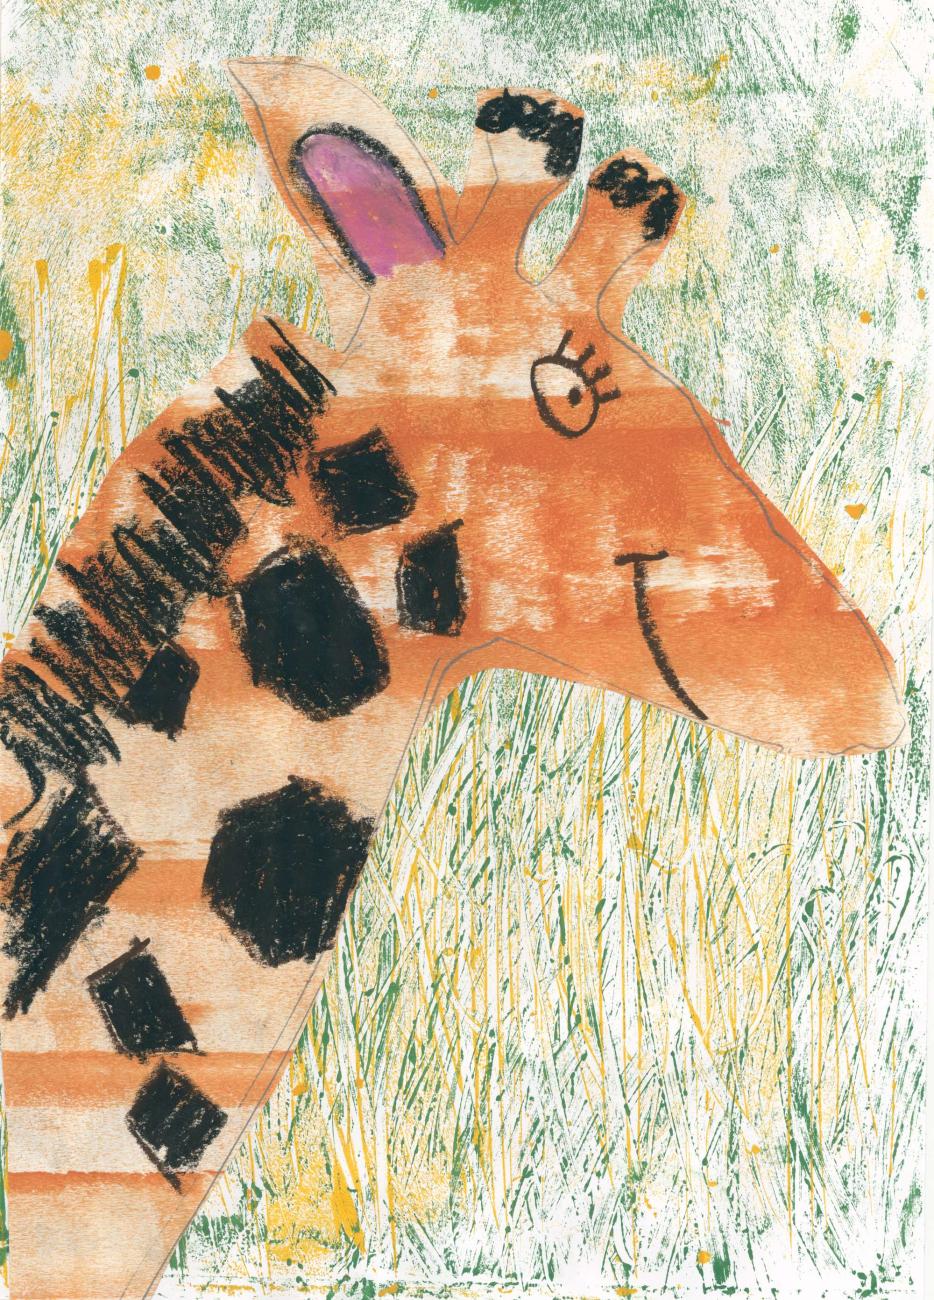 Artwork from Operation Art 2021 – Giraffe by Ella Watch, Carenne School